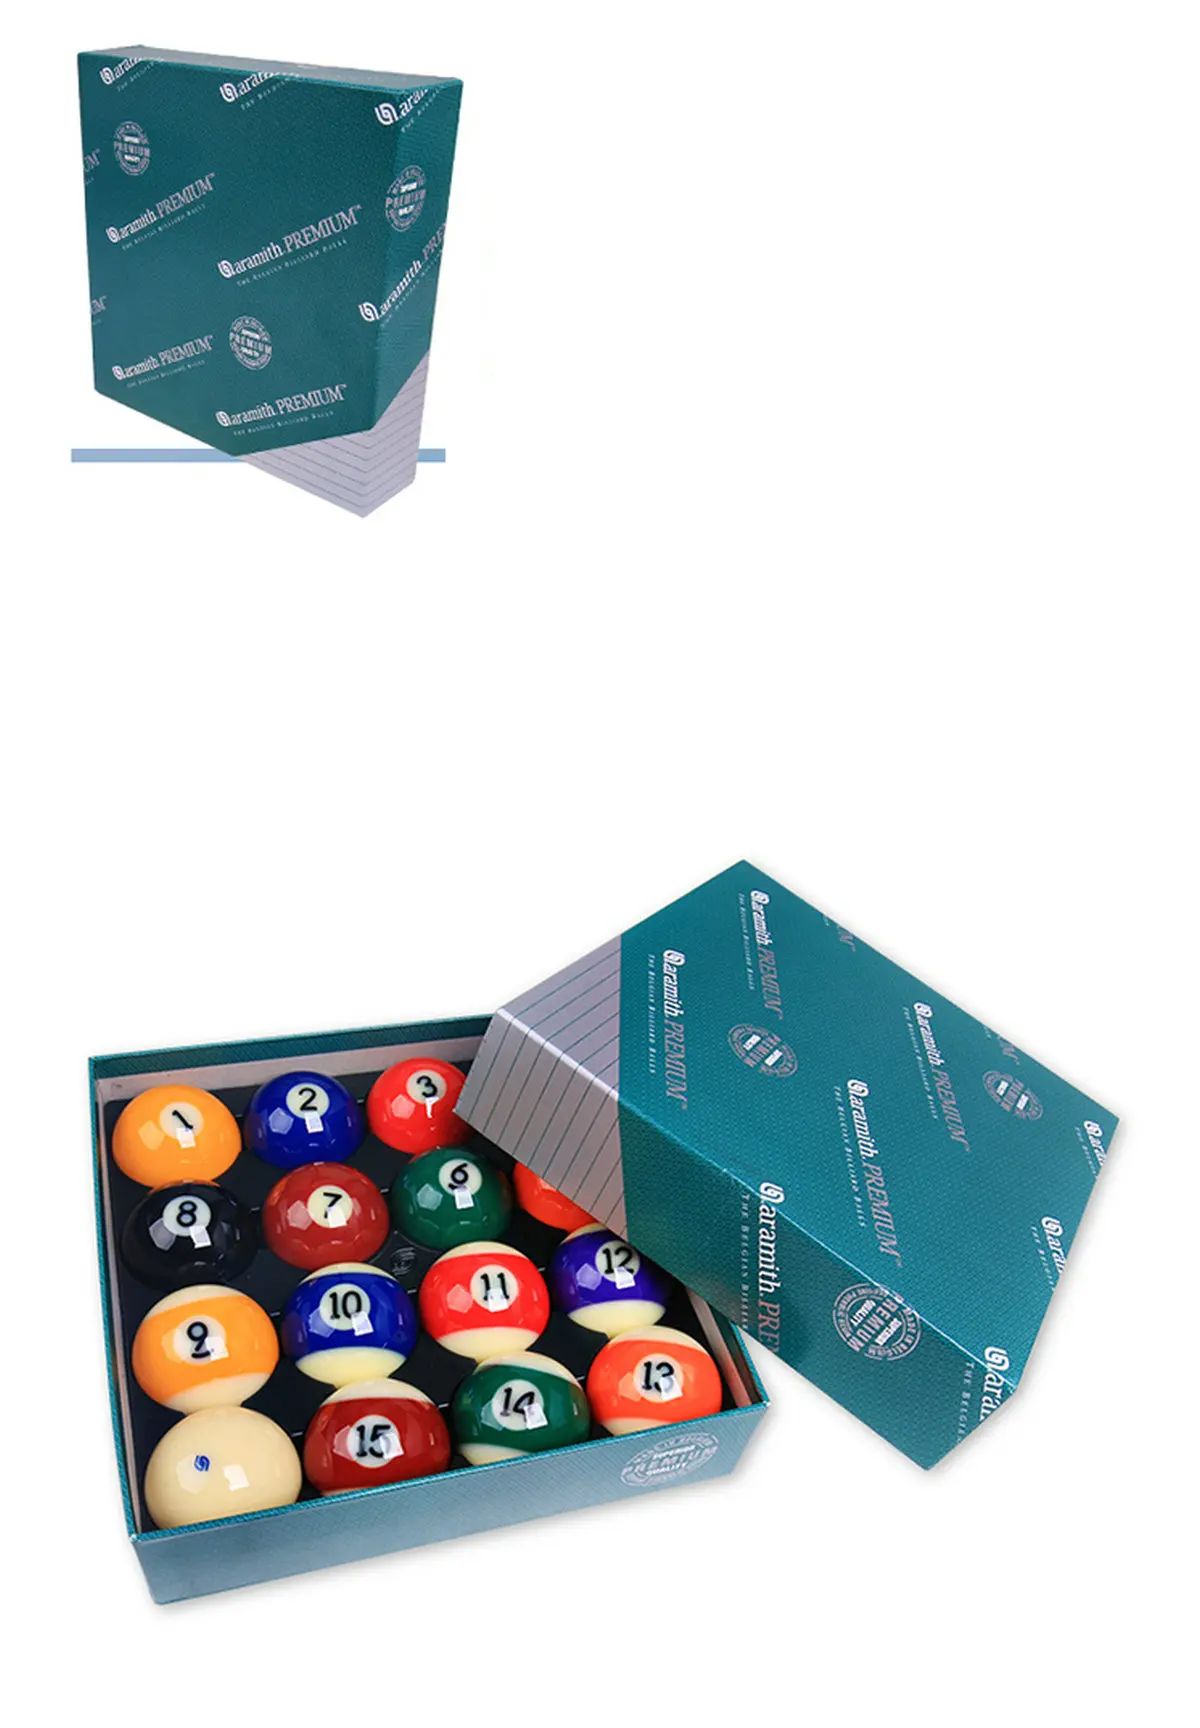 Buy TAOM POOL CHALK 2.0-LIGHT BLUE Online Now at Premier Billiards